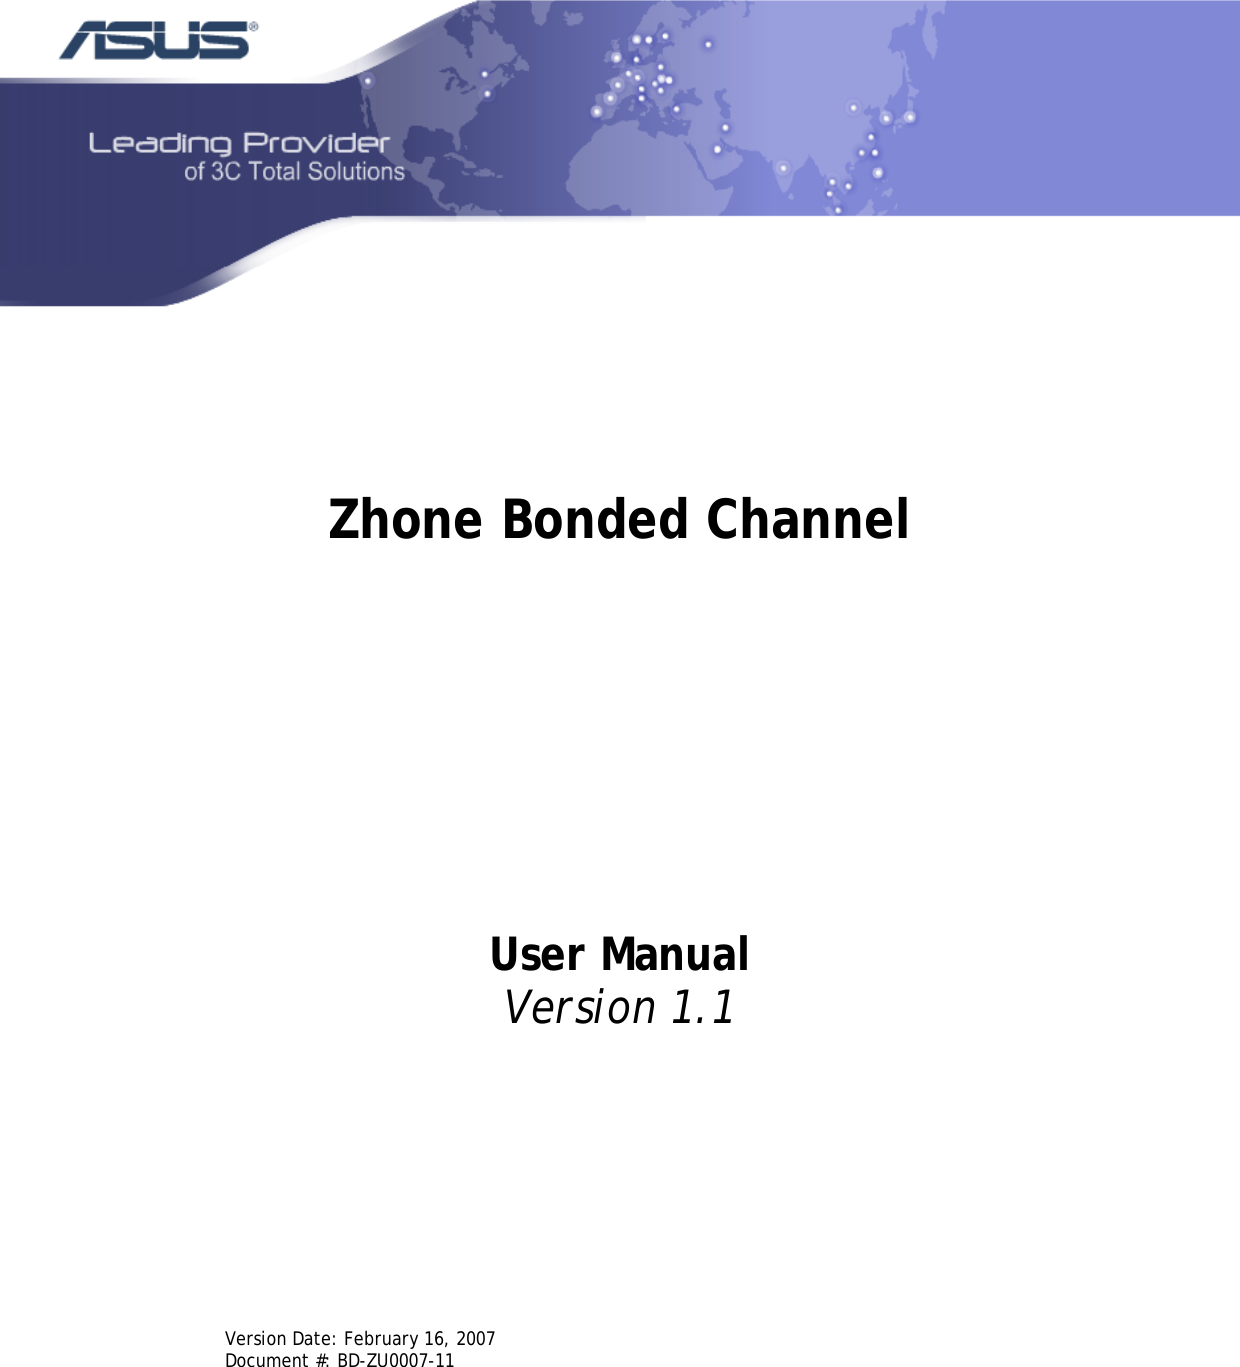     Zhone Bonded Channel             User Manual Version 1.1         Version Date: February 16, 2007 Document #: BD-ZU0007-11   